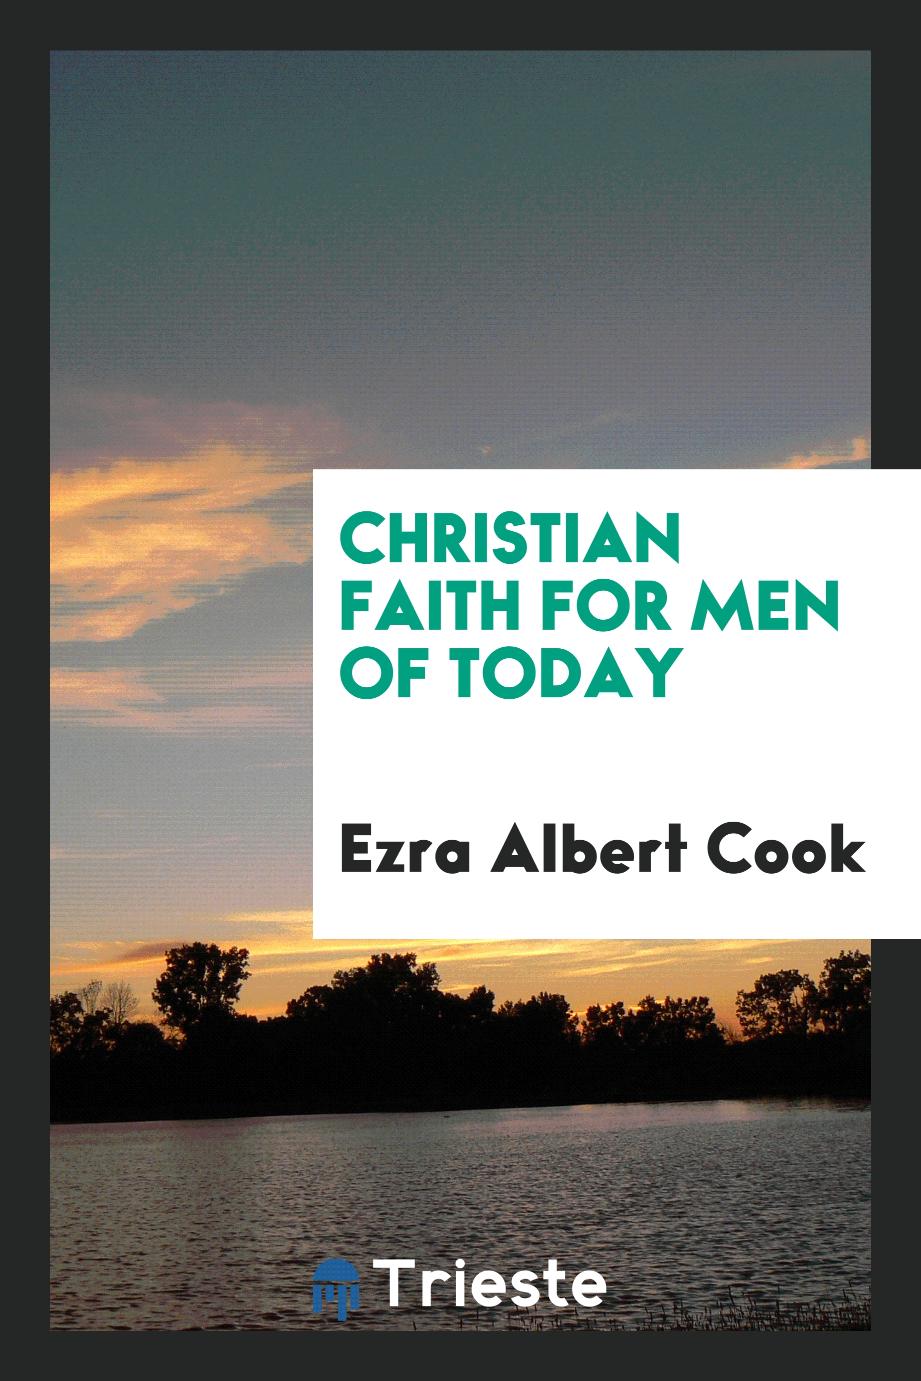 Christian faith for men of today